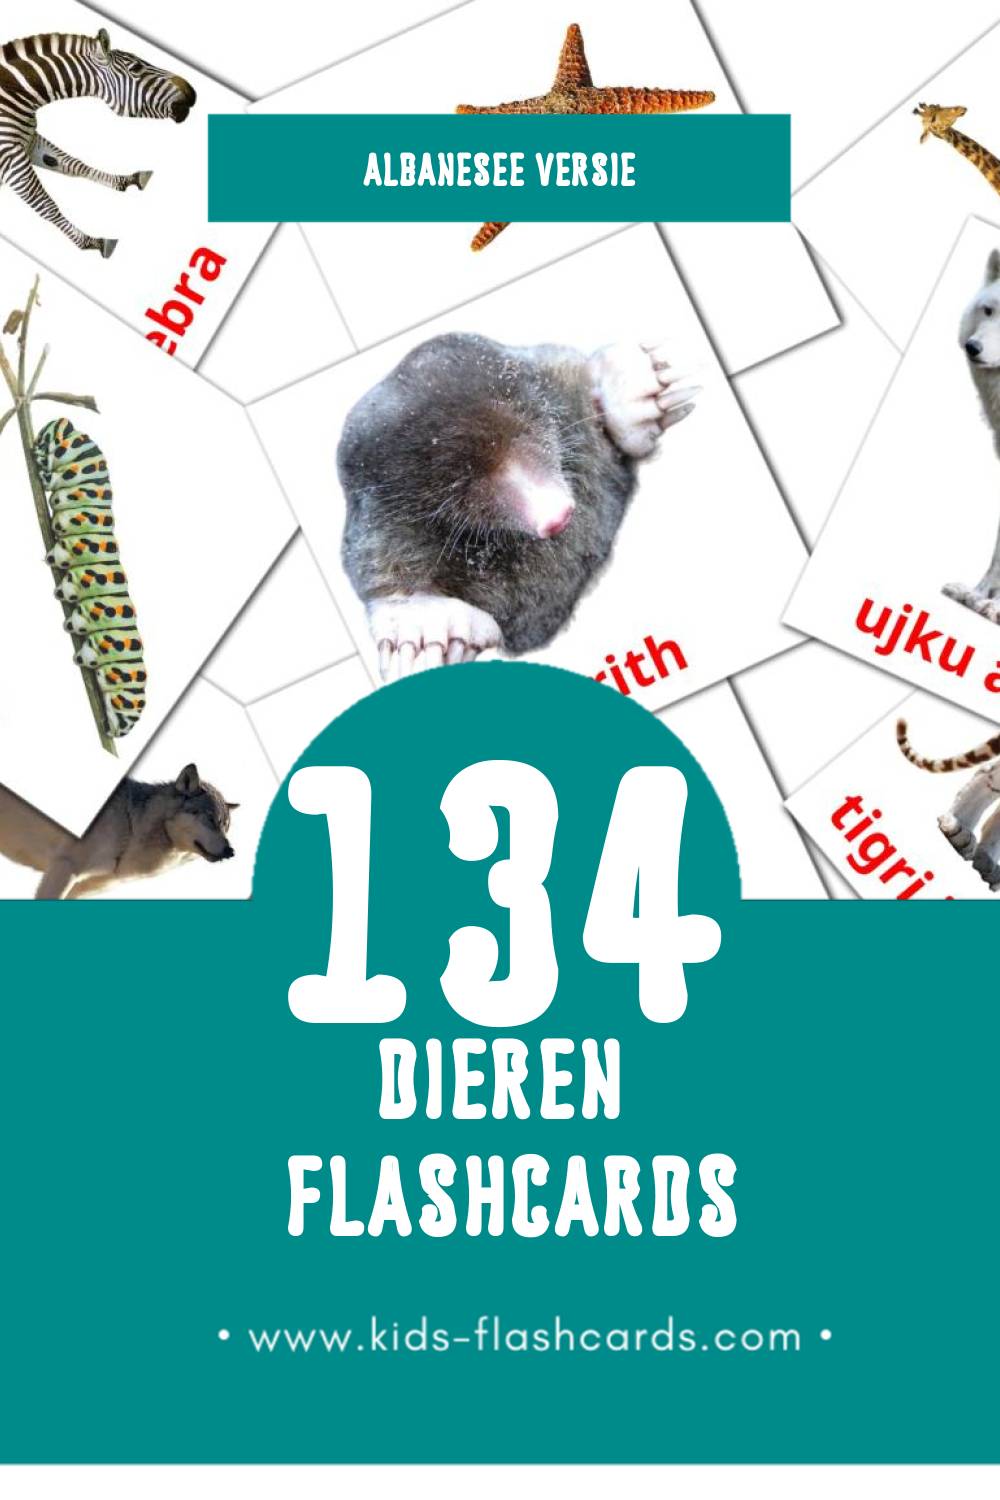 Visuele Kafshët Flashcards voor Kleuters (134 kaarten in het Albanese)